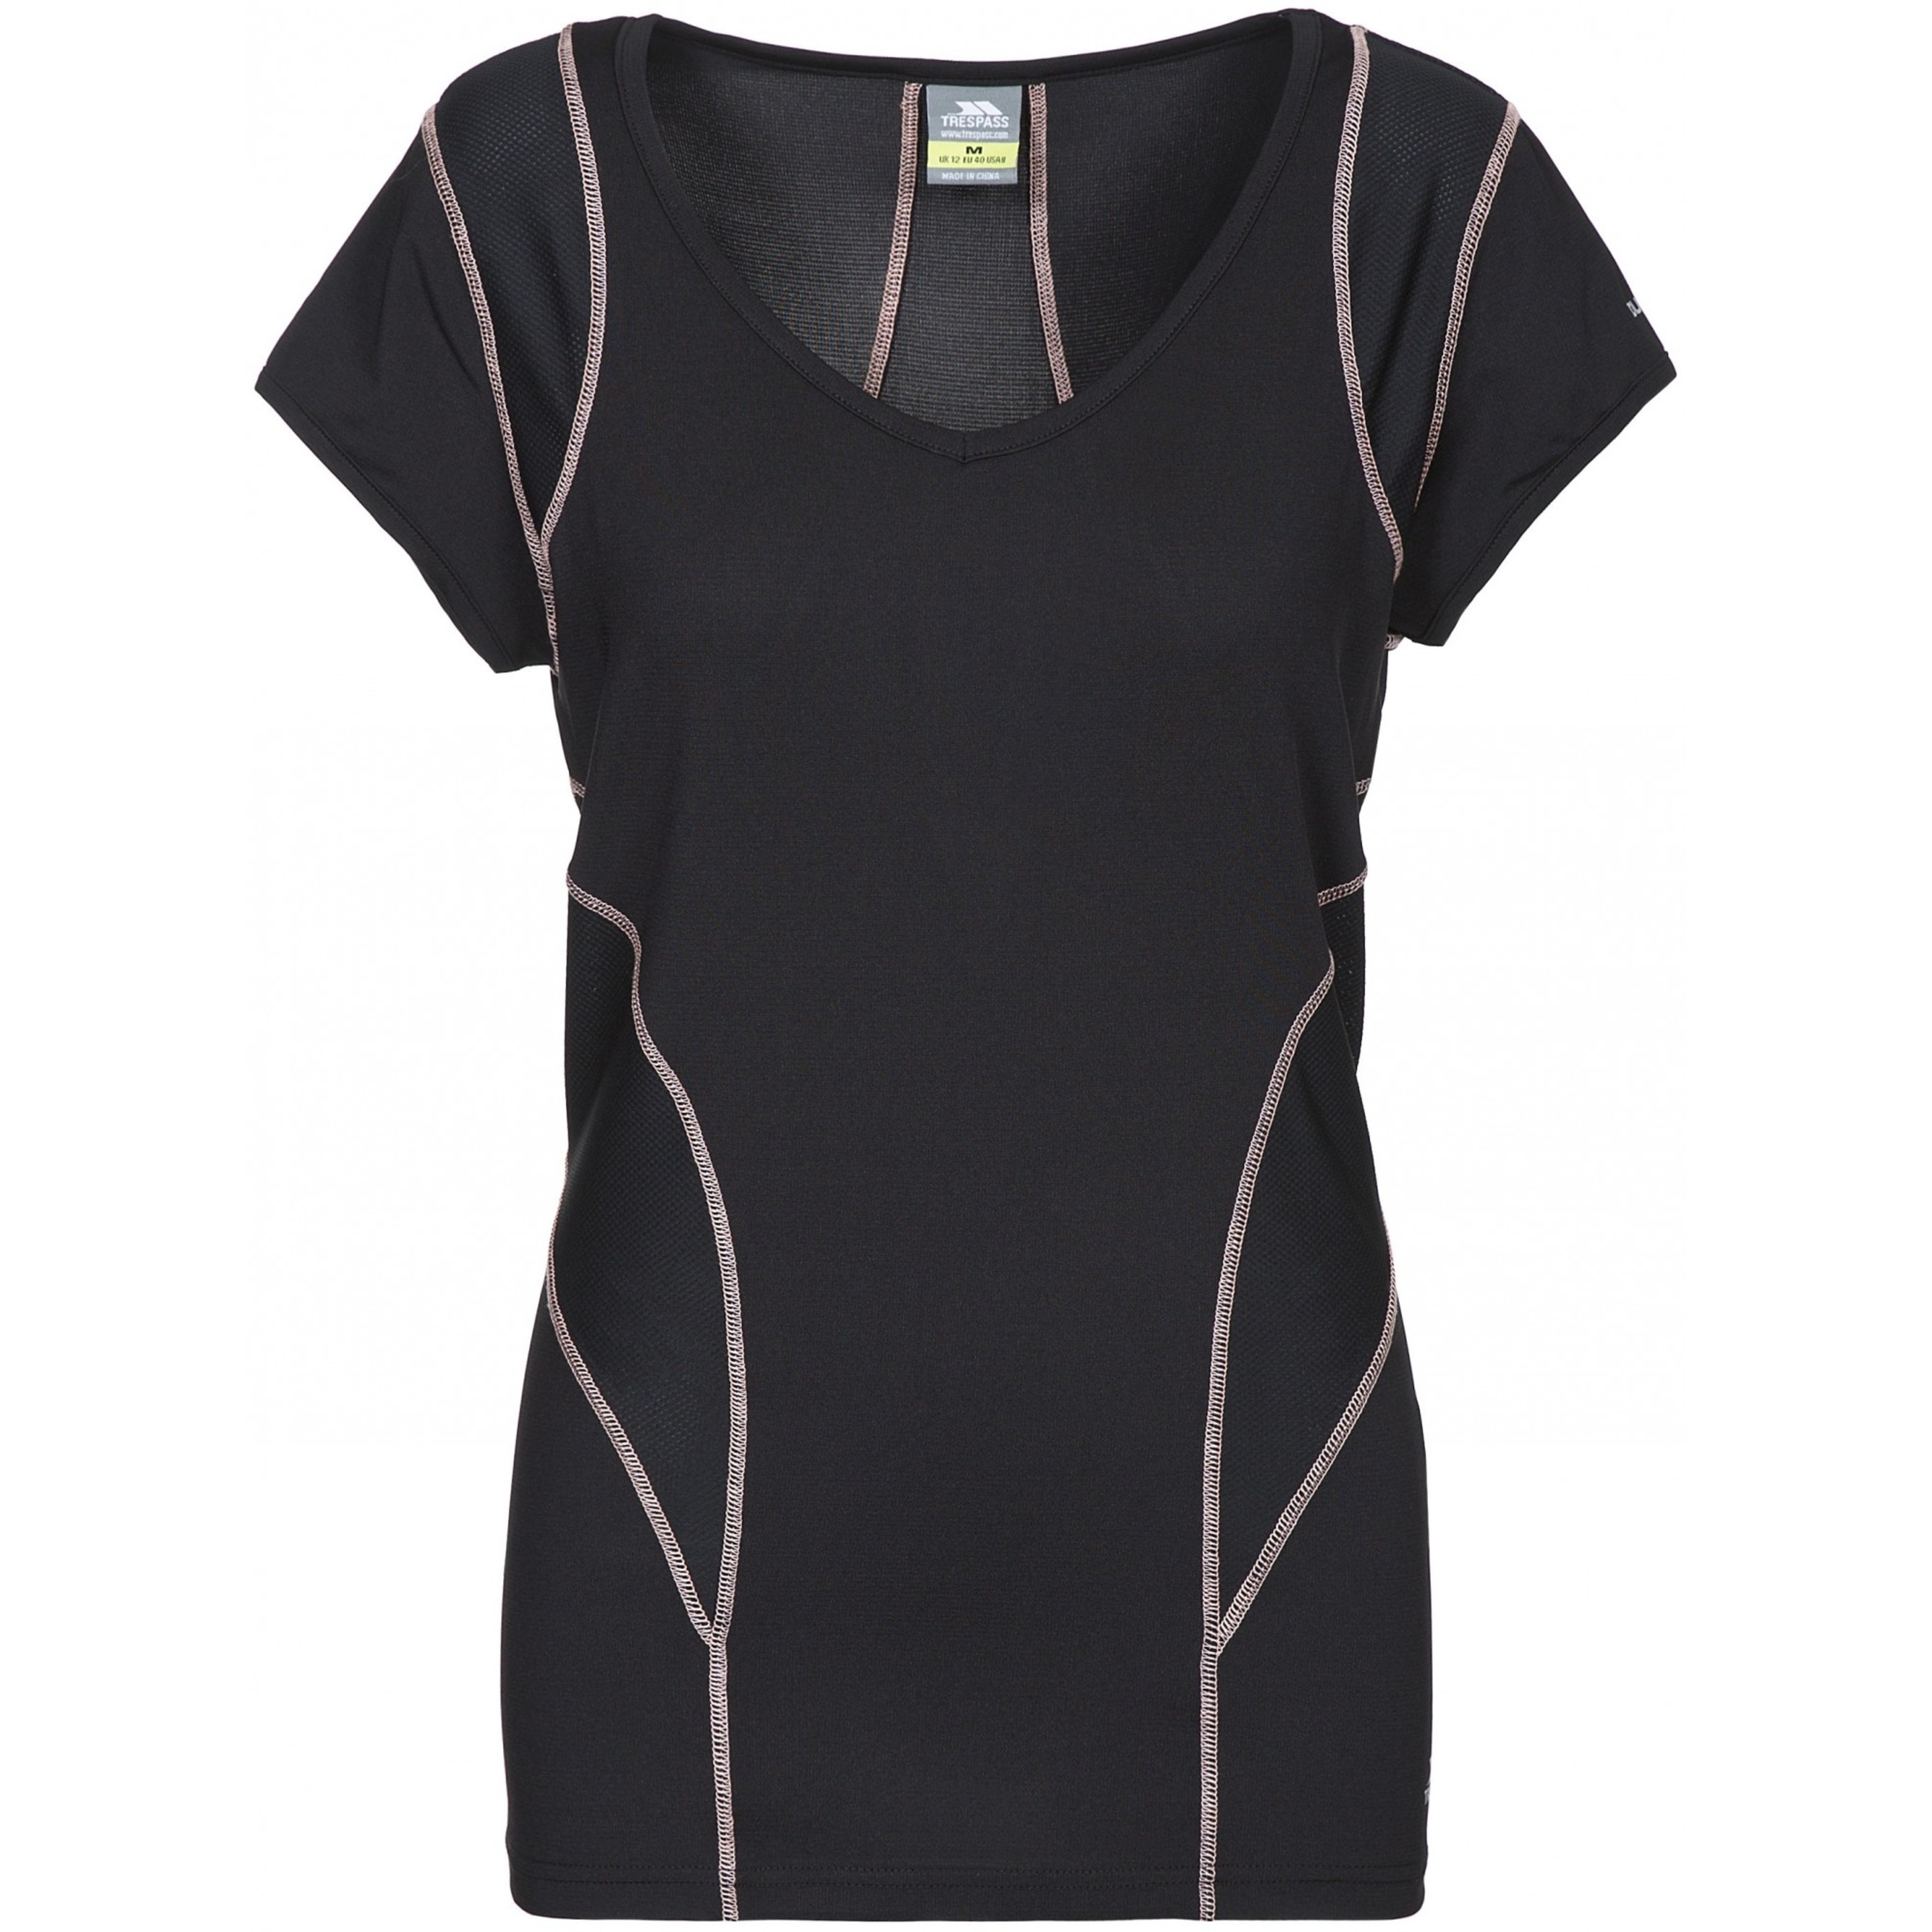 Camiseta Esportiva Feminina/ladies Erlin Short Sleeve Trespass (Preto) - negro - 